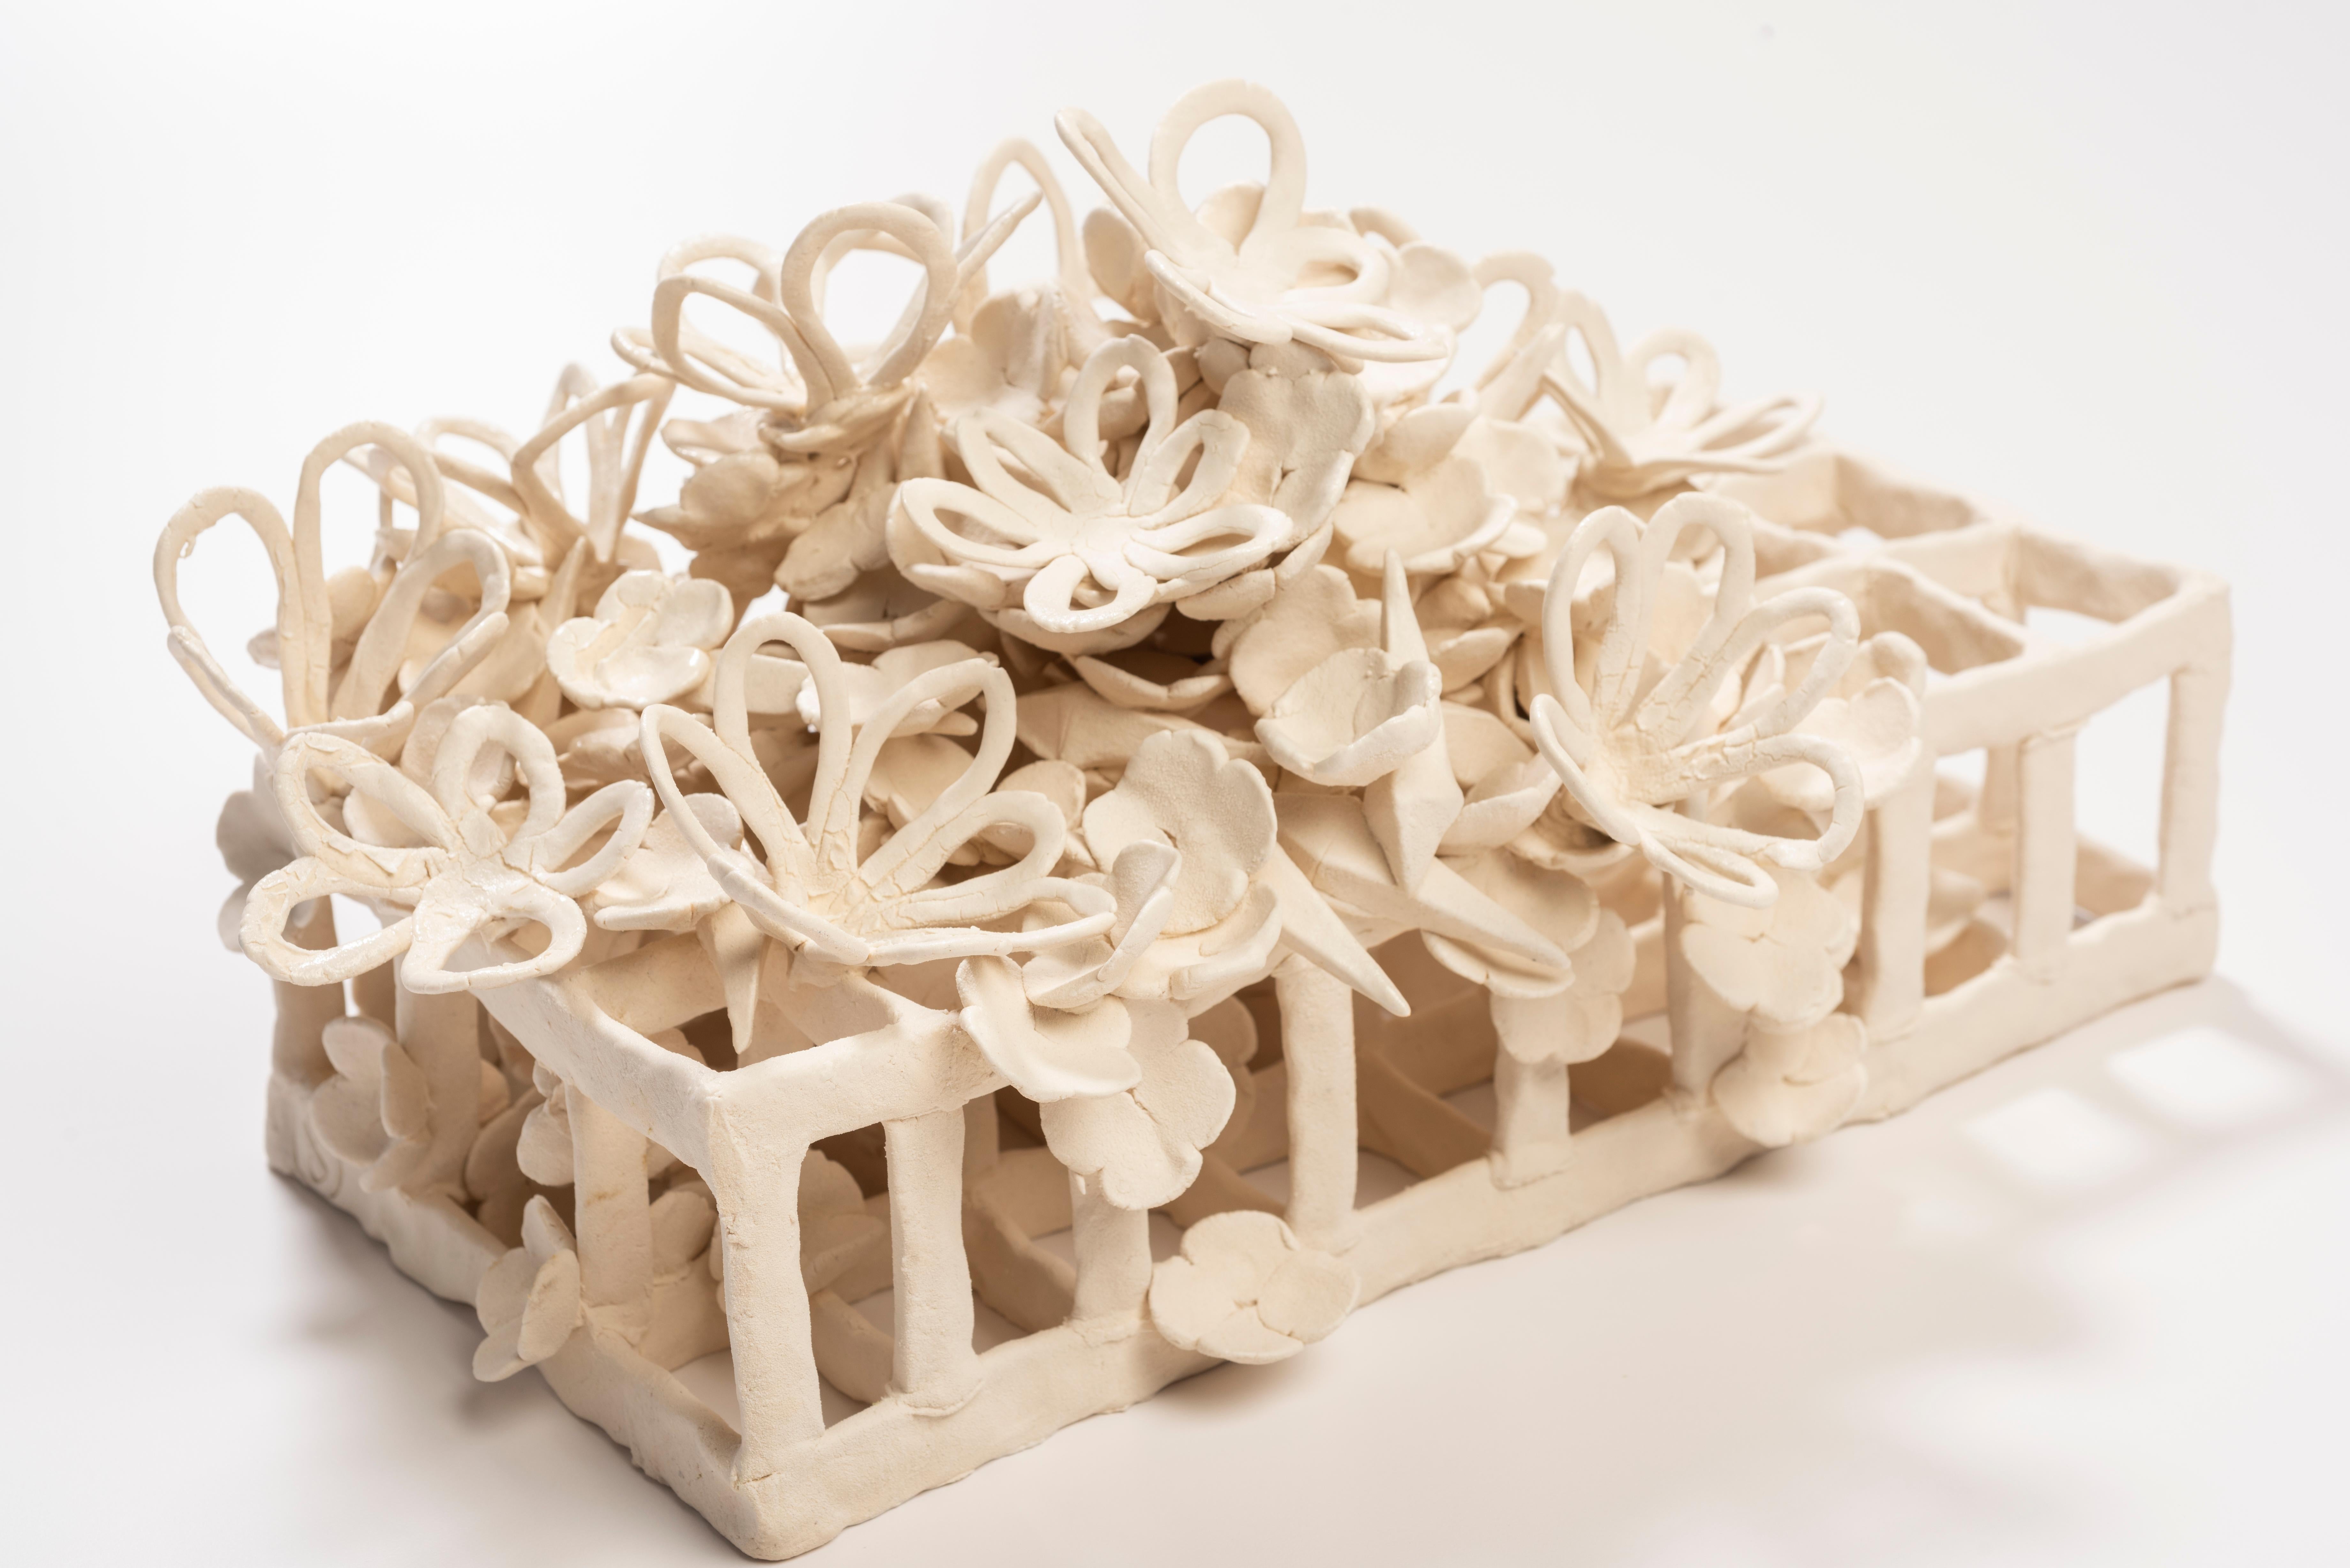 Organic Modern Joanna Poag Binding Time (Grid w/ Quatrefoils & Flowers) Ceramic Sculpture, 2019 For Sale